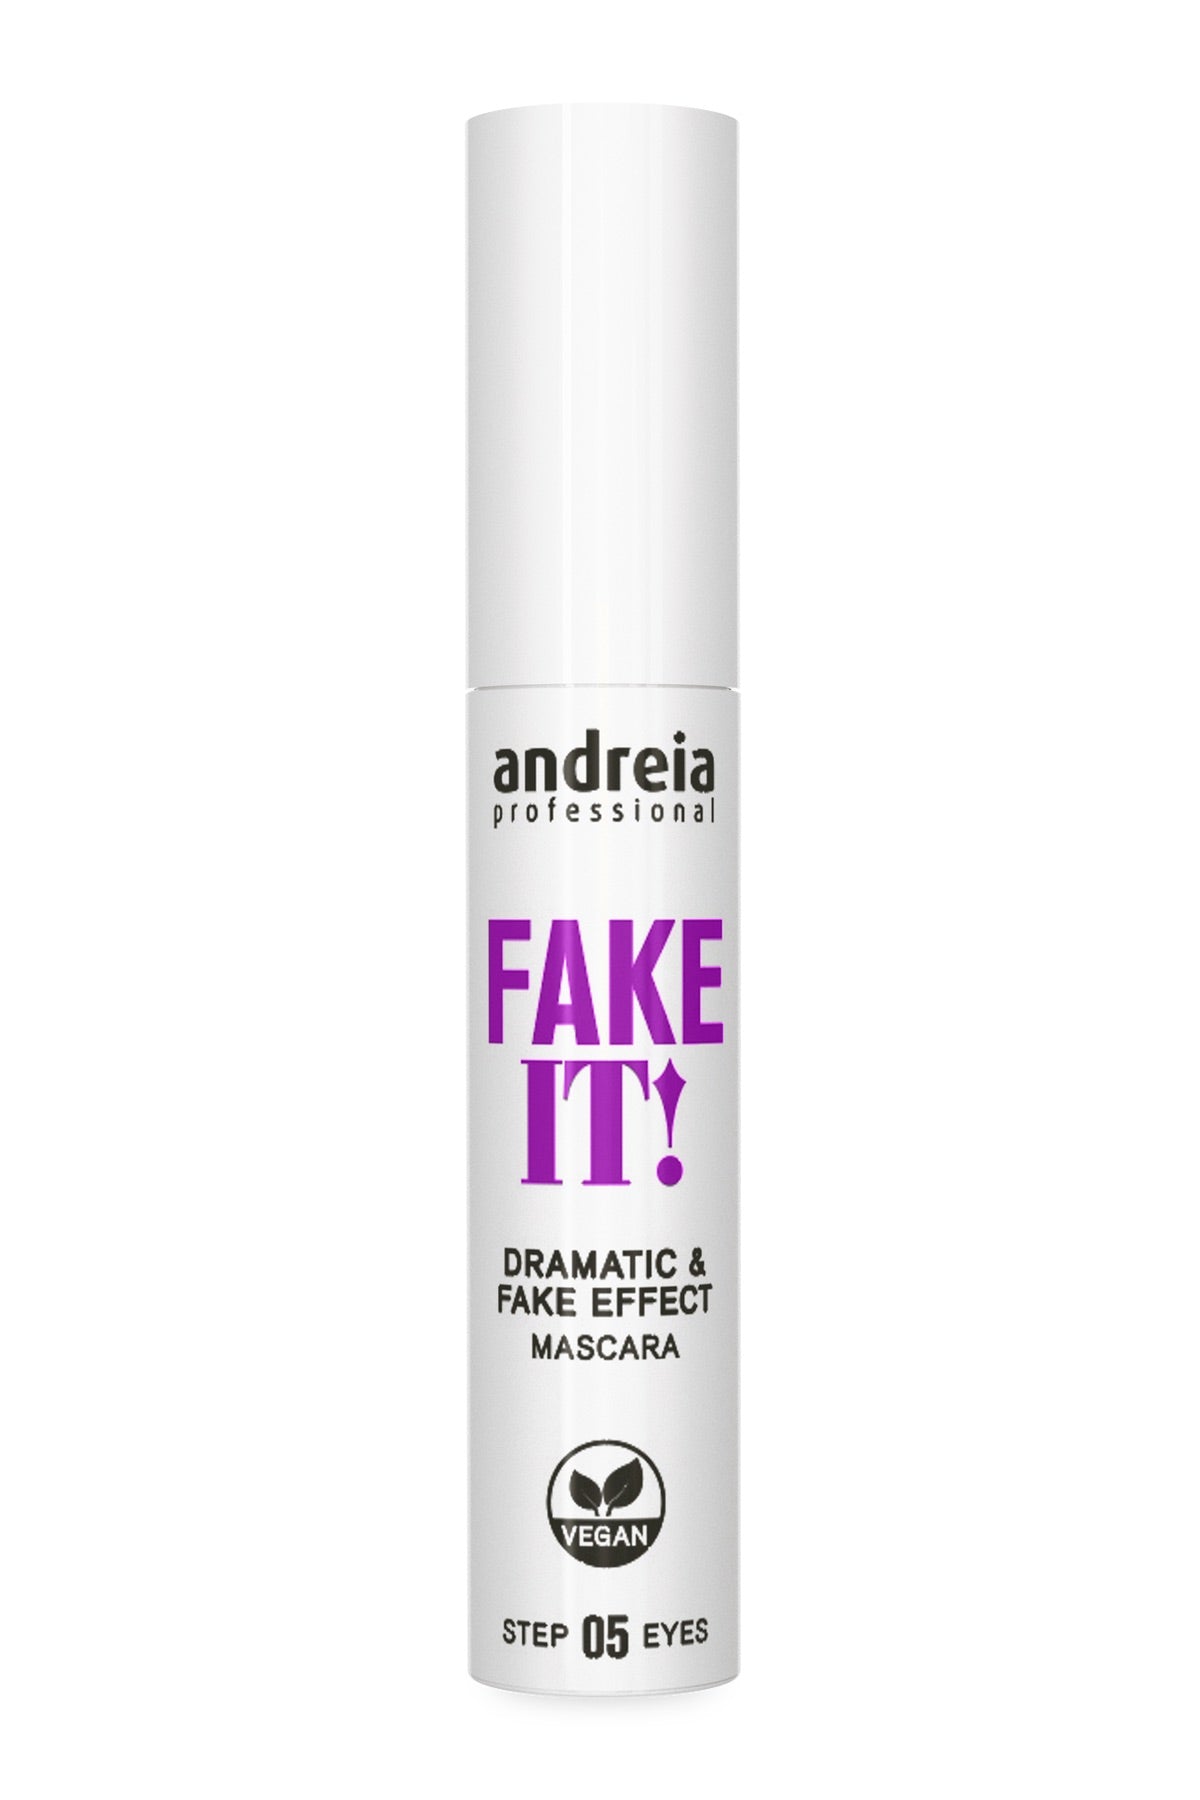 Andreia Fake it! - Mascara - The Beauty Marque